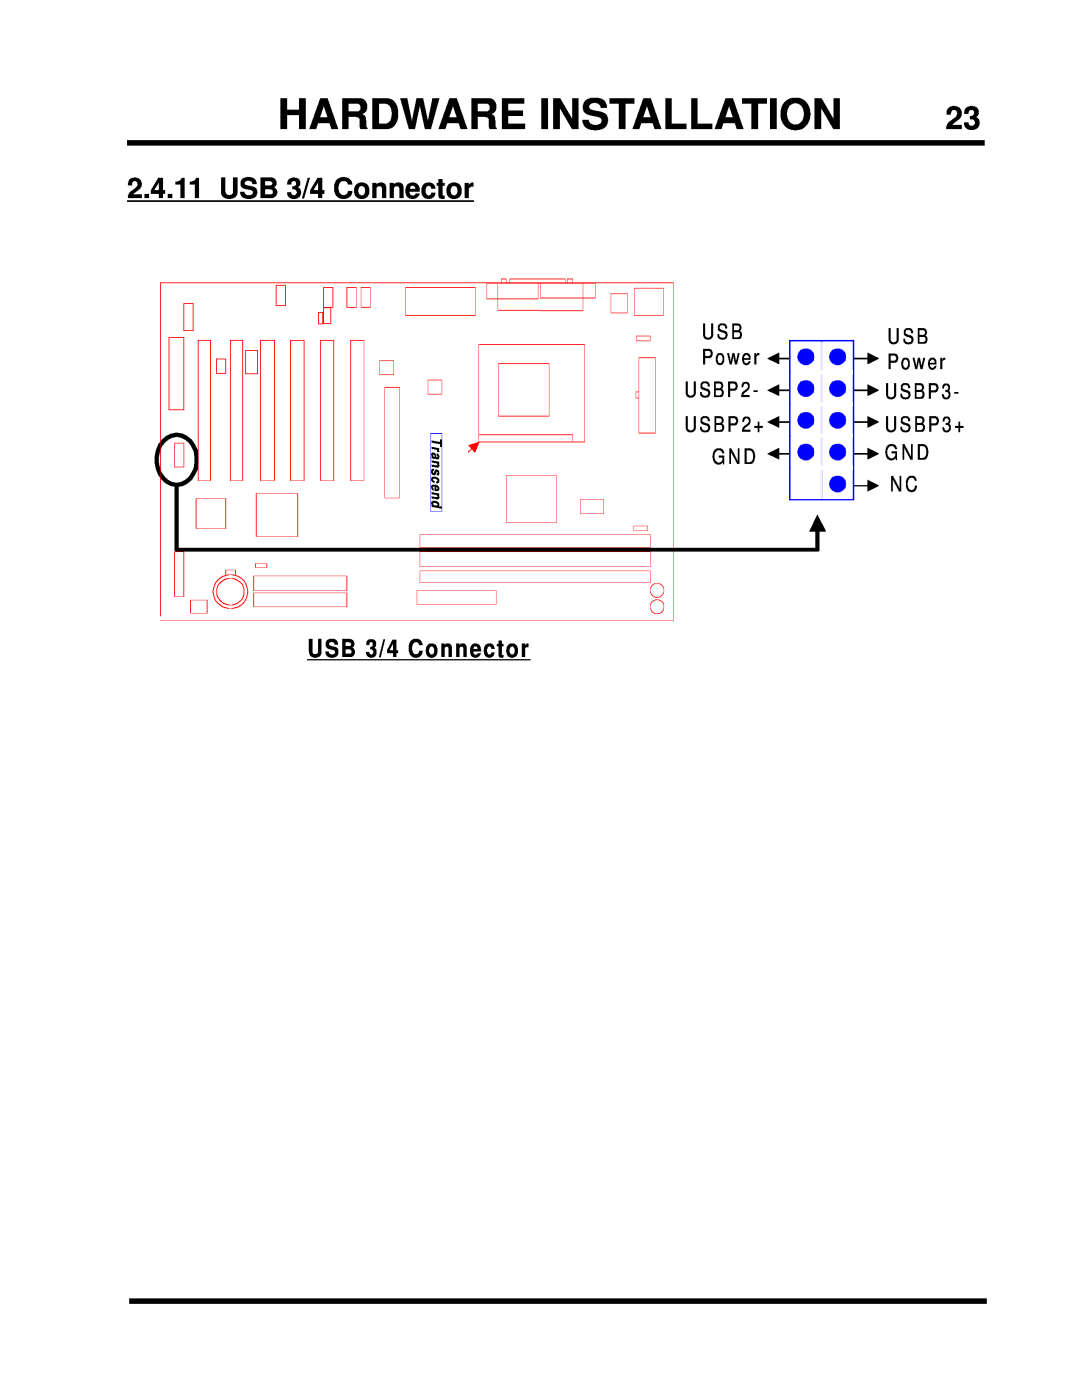 Intel TS-ASP3 user manual USB 3/4 Connector, Hardware Installation, U S B P 2 +, U S B P 3 +, Transcend 